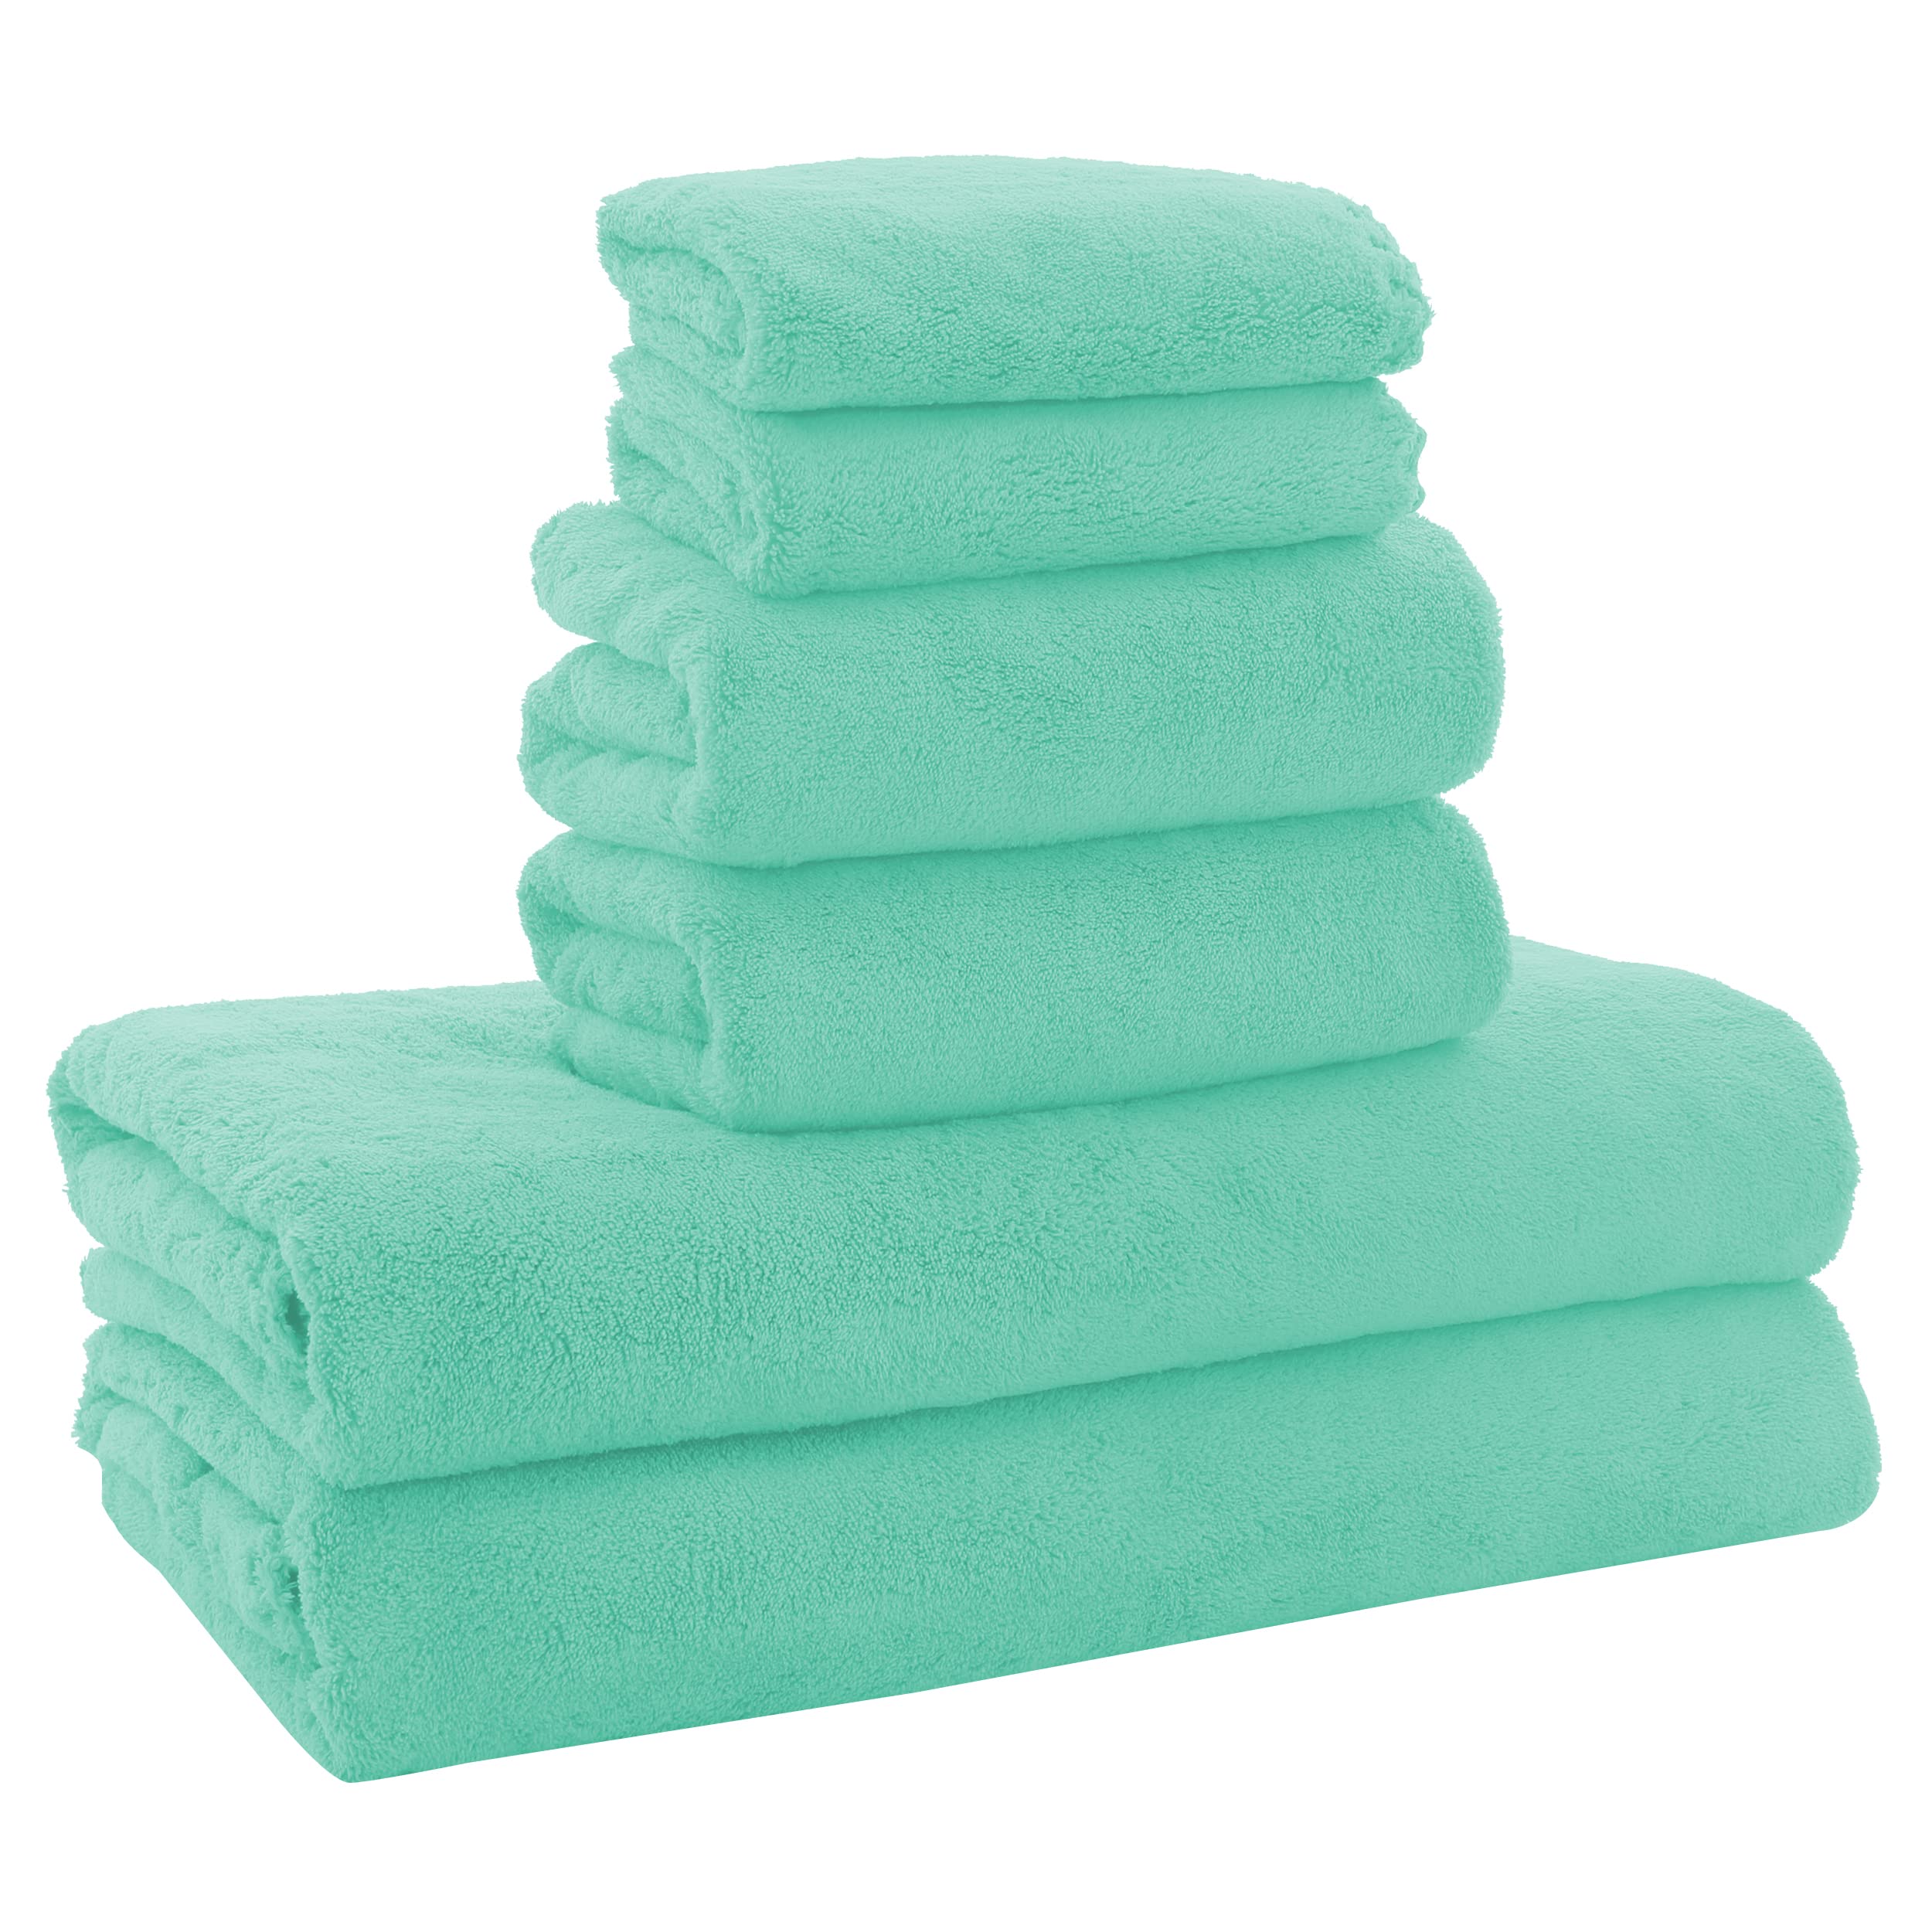 Microfiber bath towels, large bathroom towels, super absorbent shower  towels, super soft towels for bathroom exercises, travel